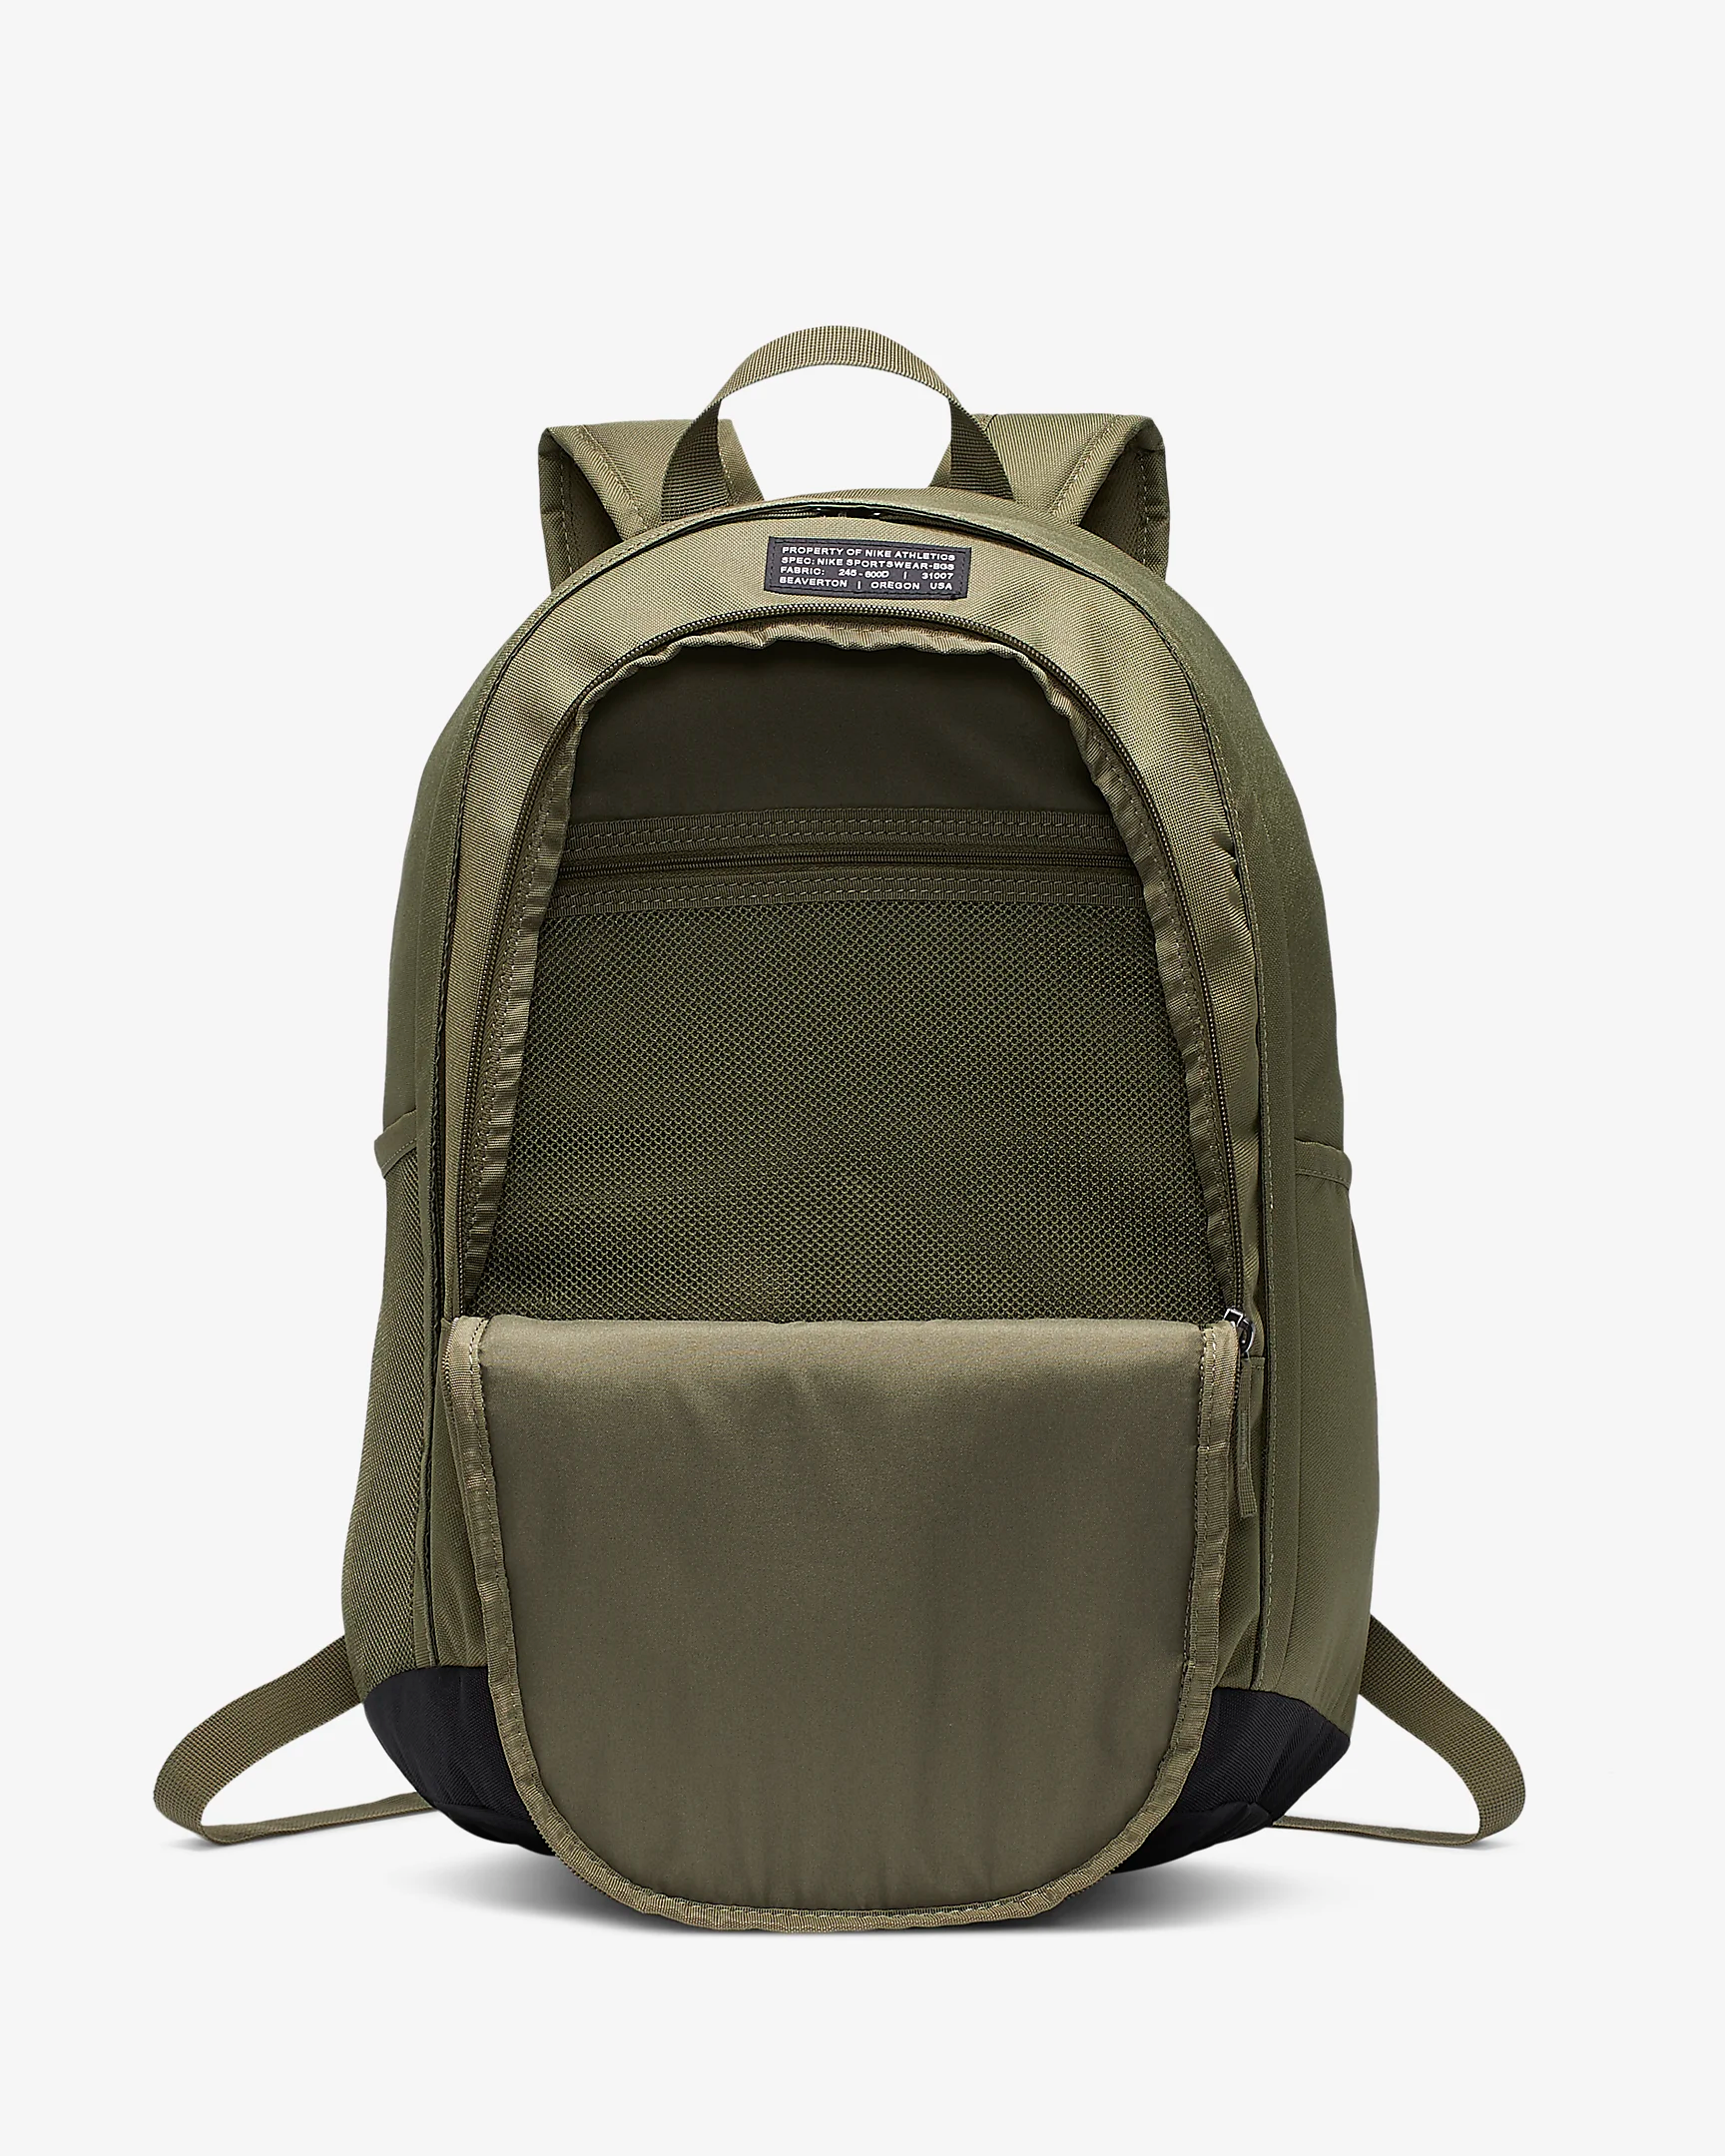 hayward-2-backpack-1DSxcG4.png